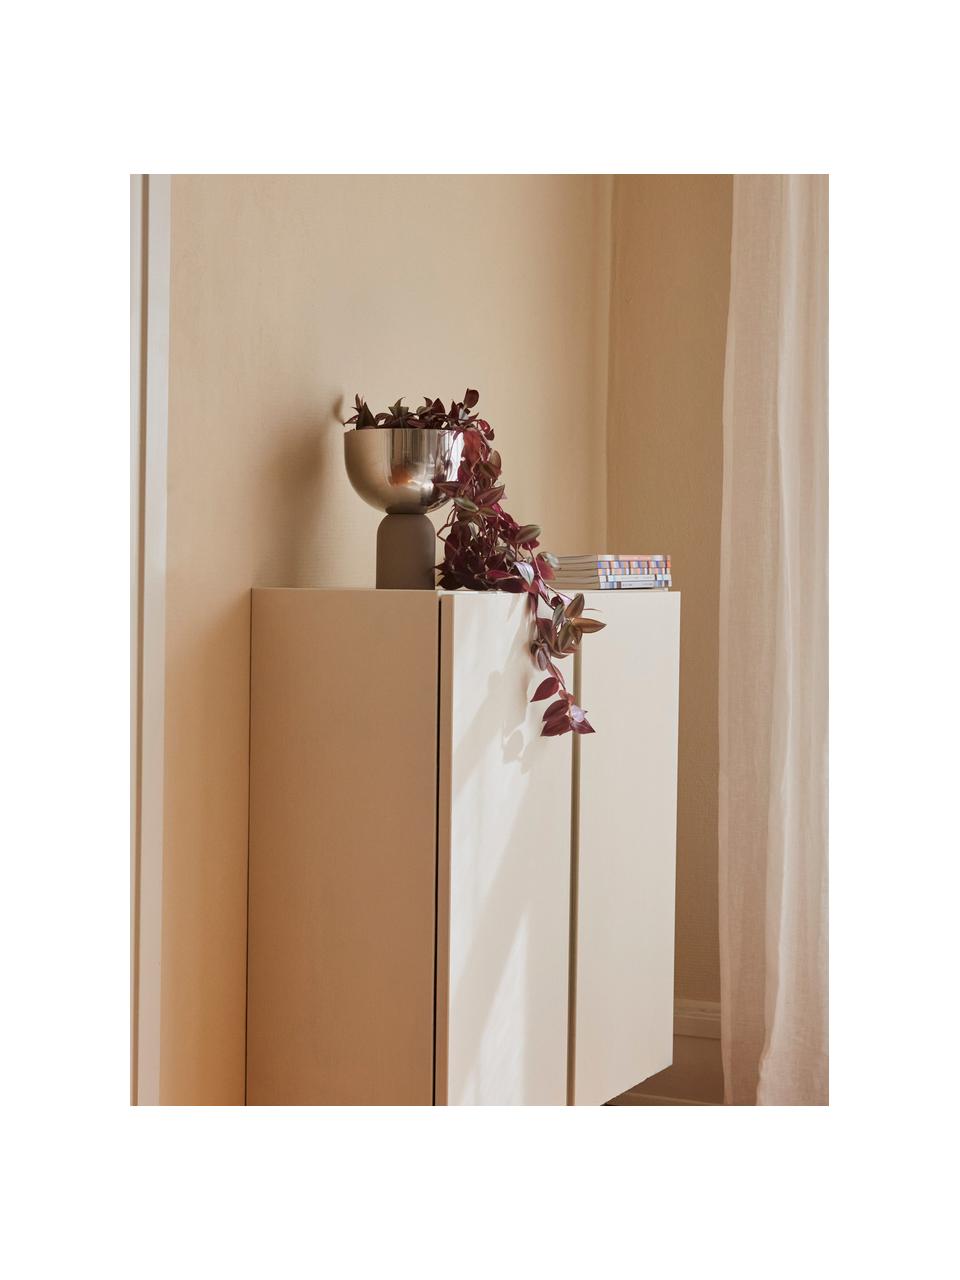 Kovový obal na květináč Torus, V 23 cm, Stříbrná, greige, Ø 17 cm, V 23 cm